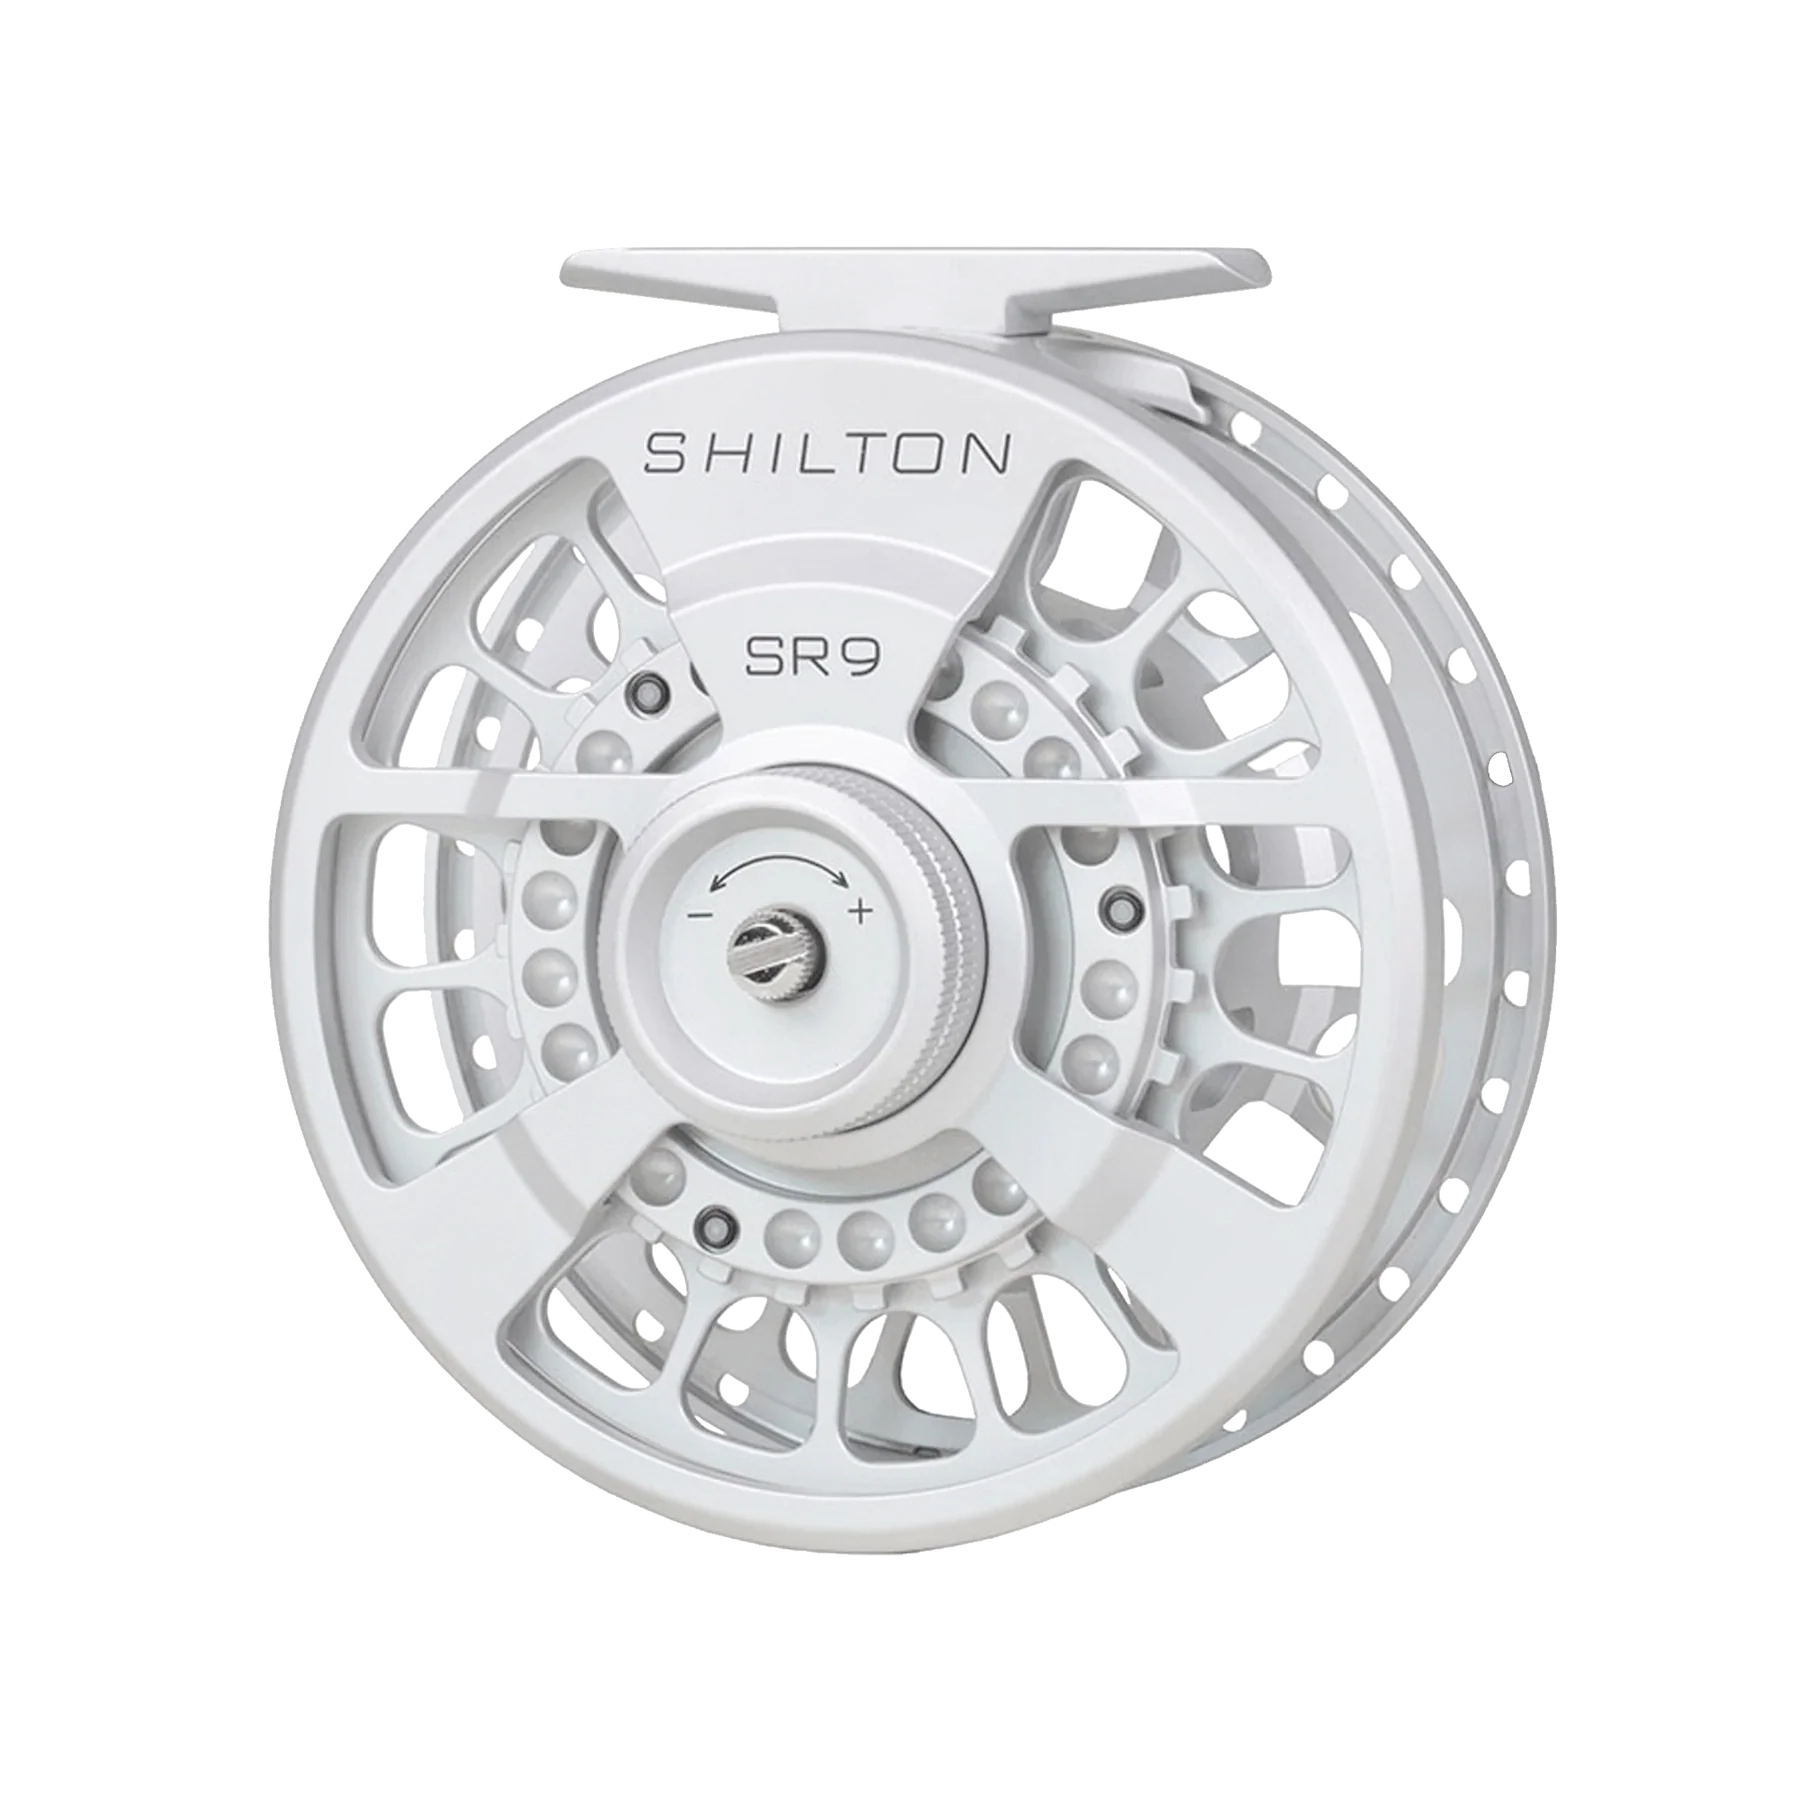 Shilton SR9 Reels (8-9wt) in Titanium Silver